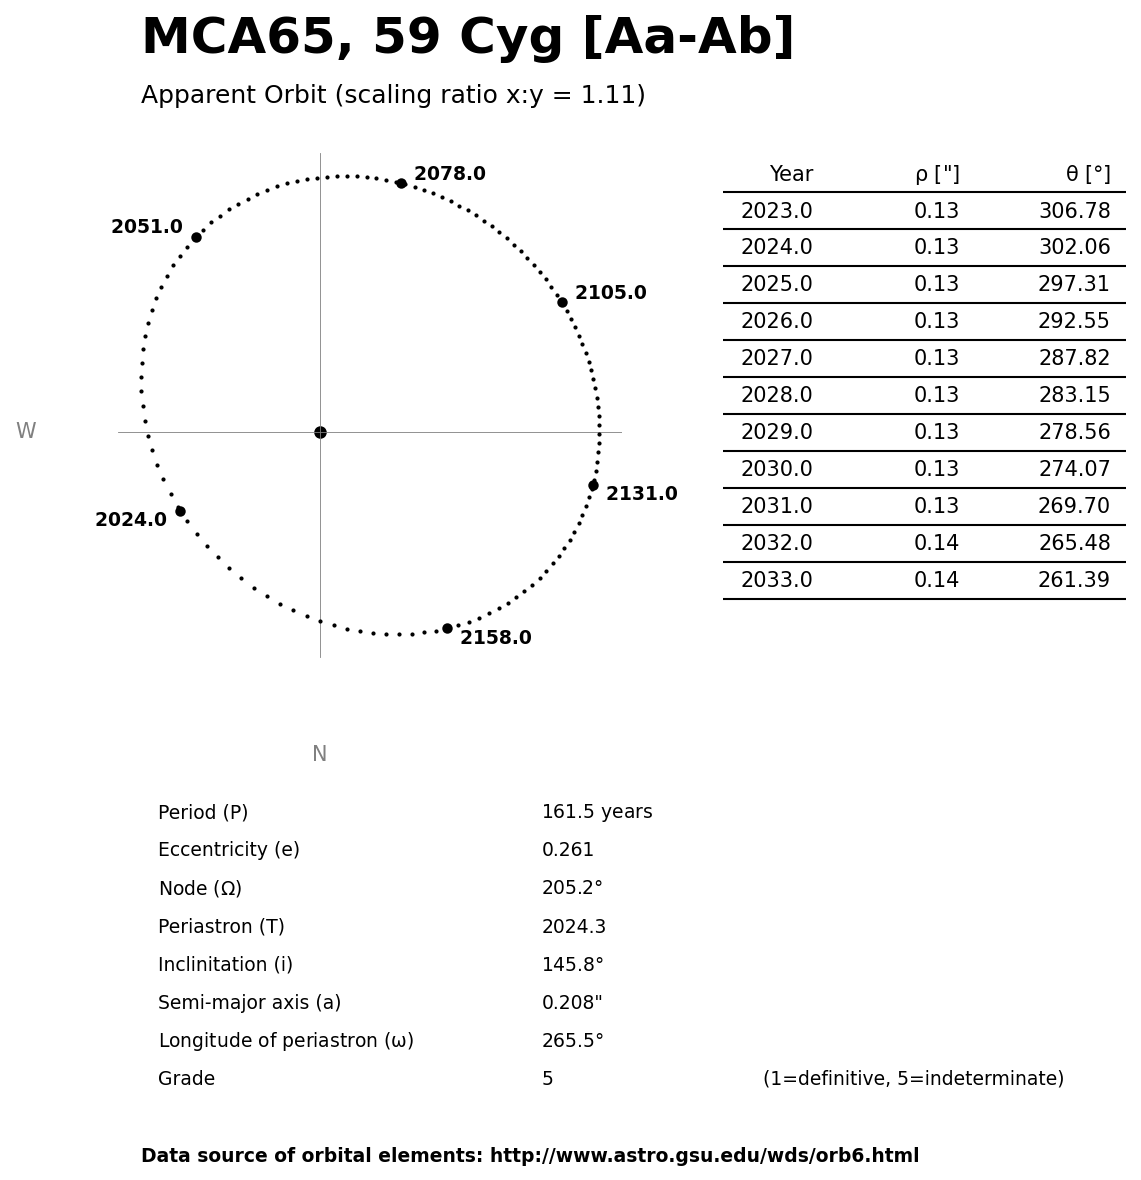 ../images/binary-star-orbits/MCA65-Aa-Ab-orbit.jpg